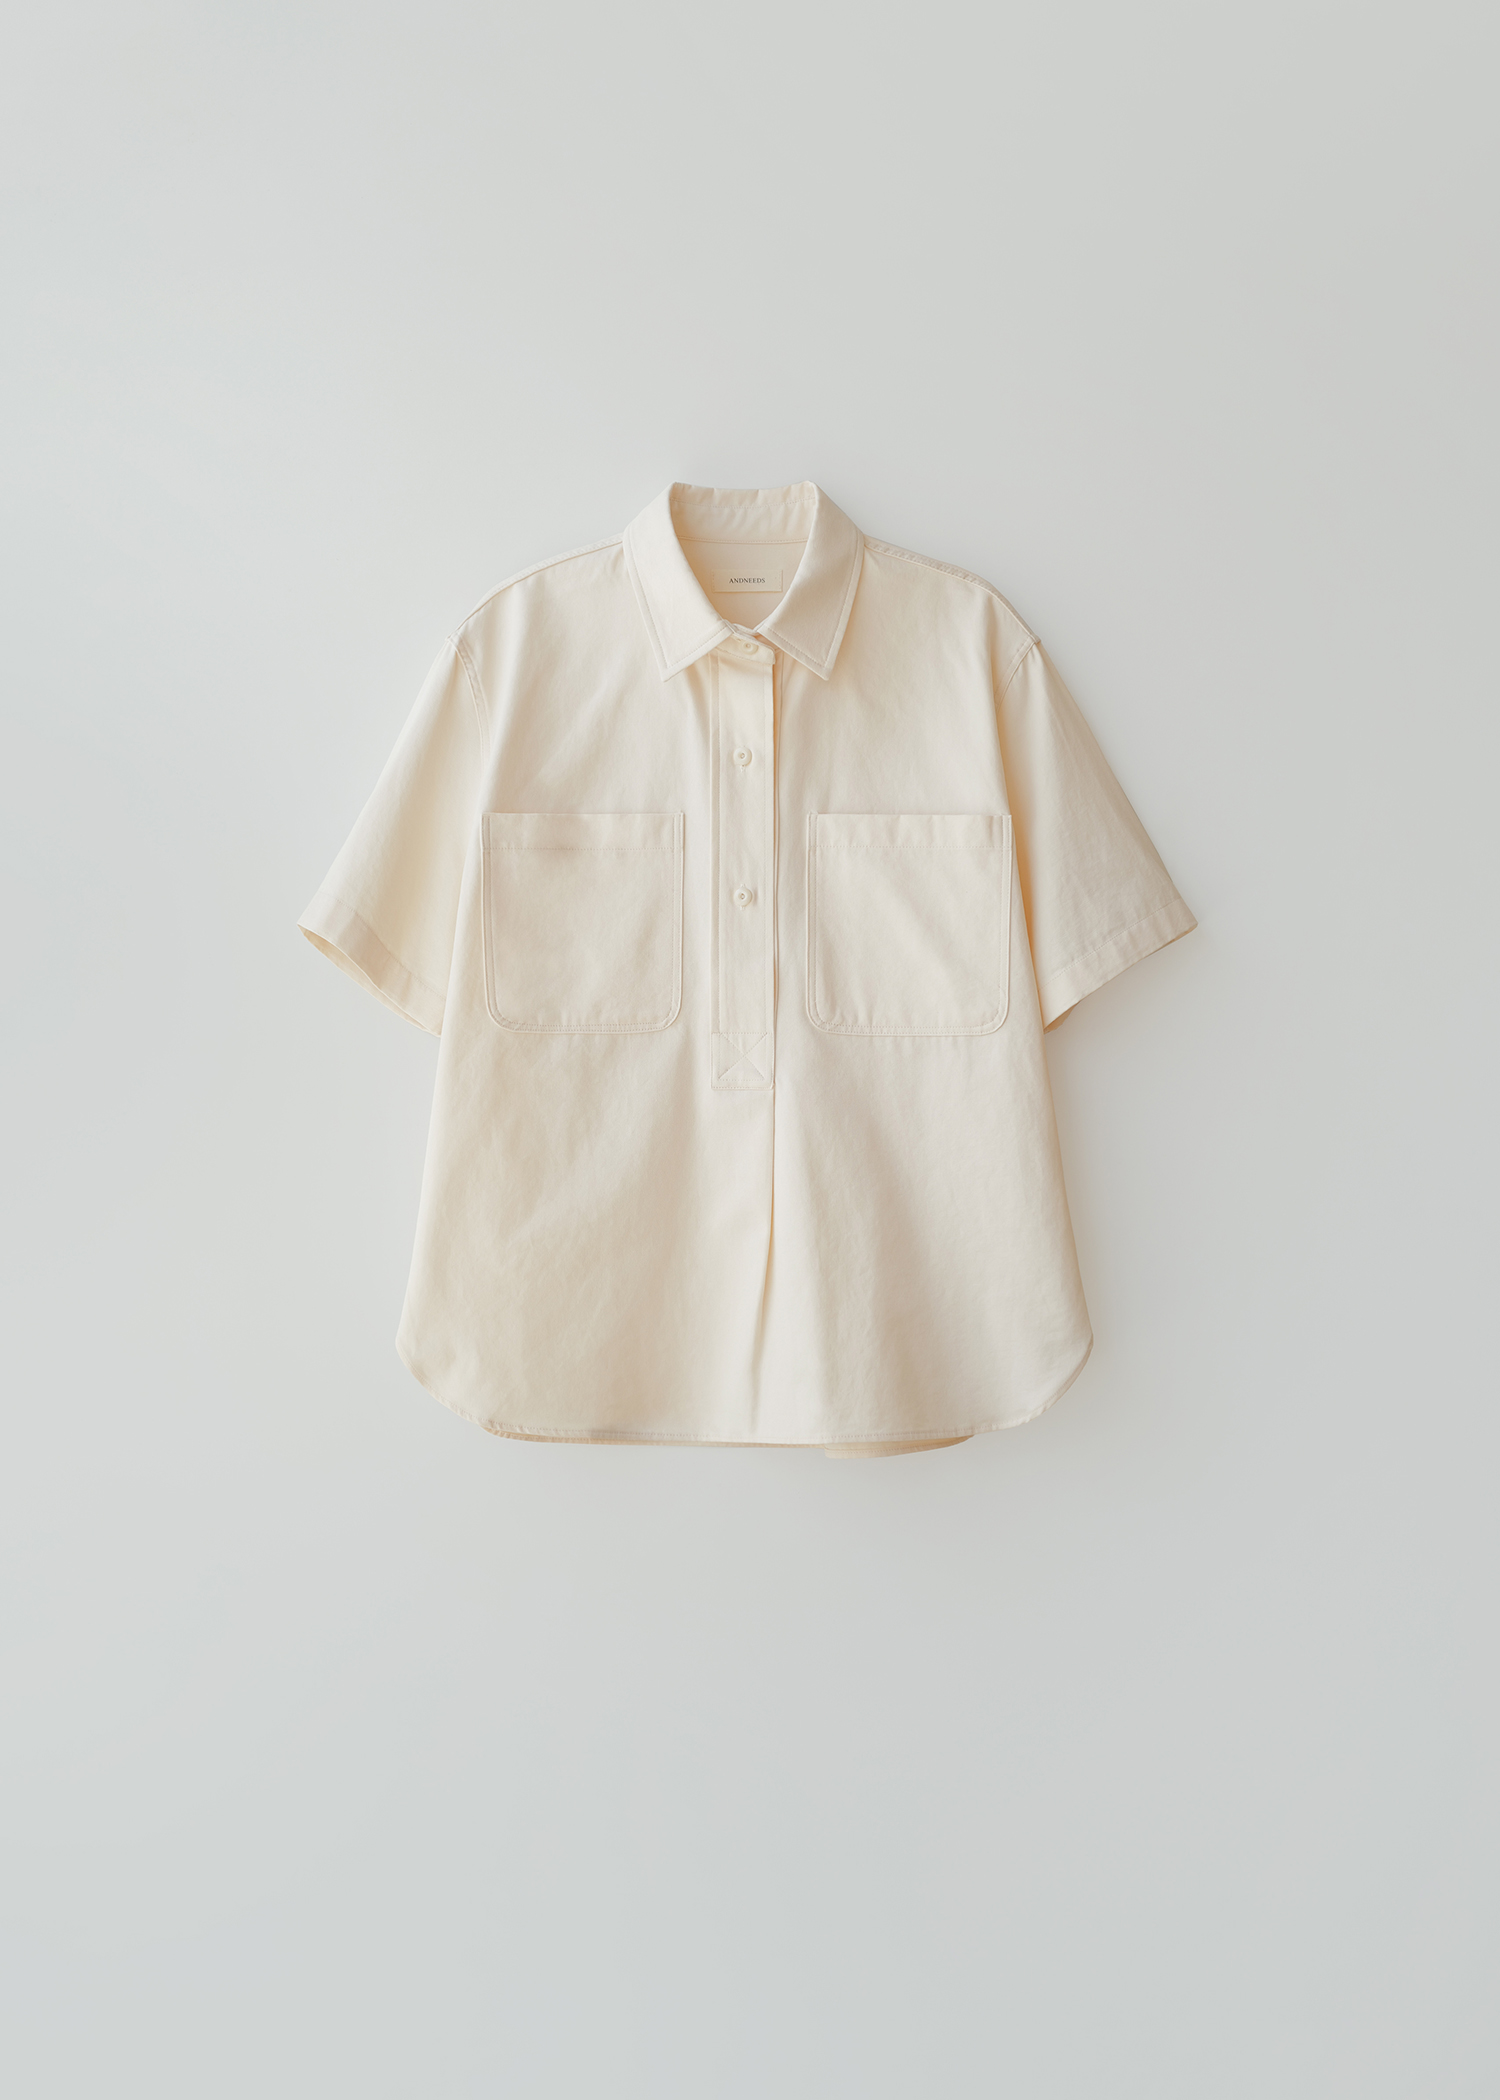 Two pocket half shirt (ivory)